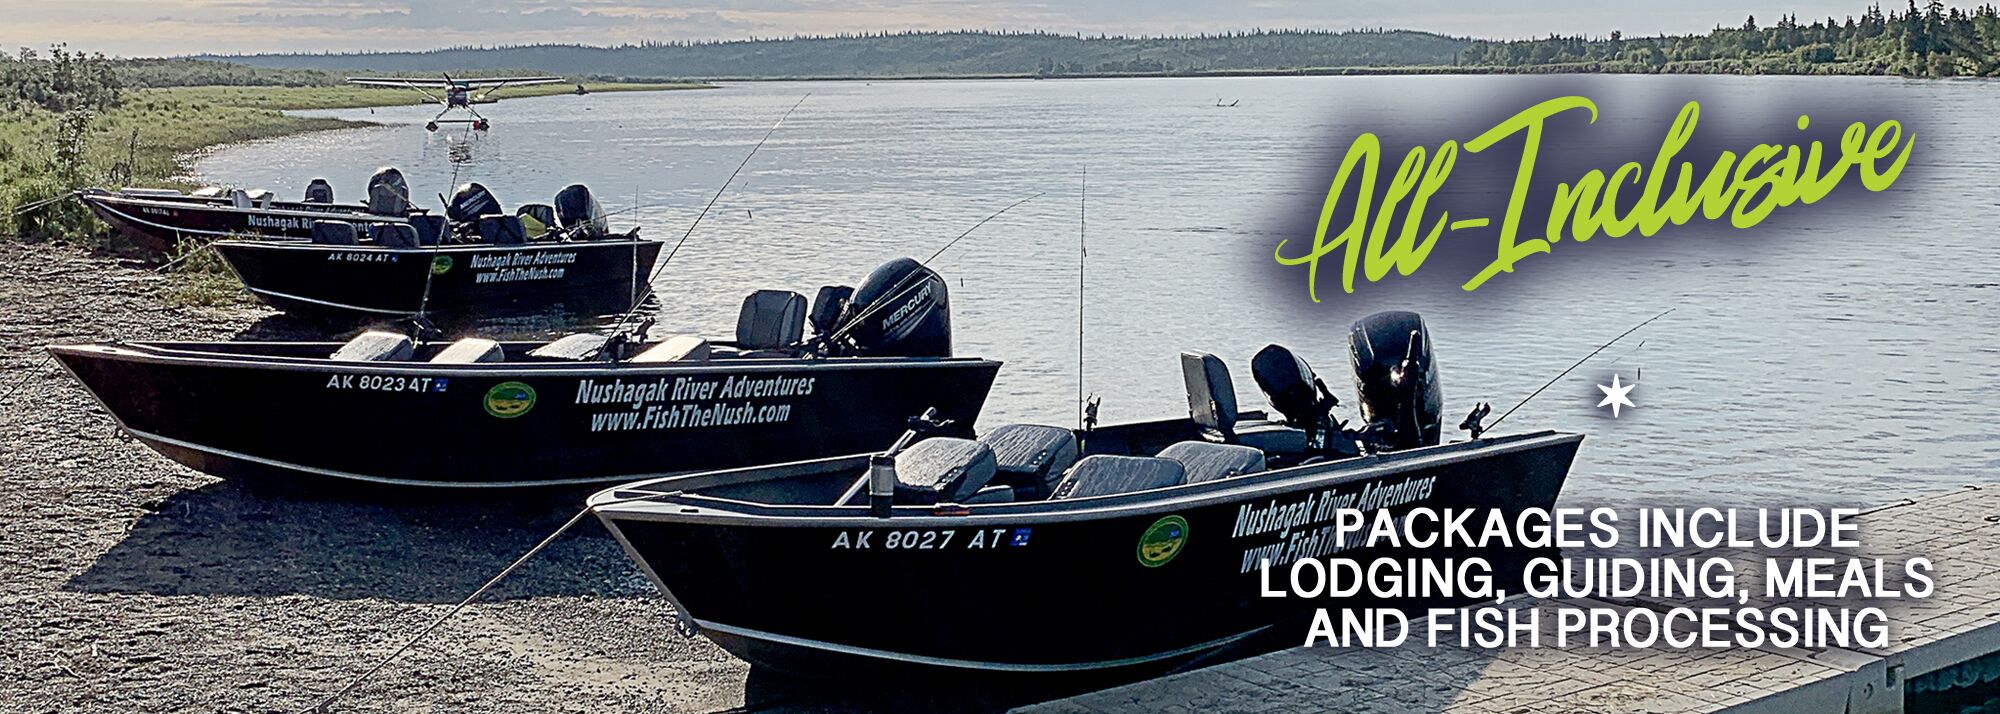 Alaska fishing license - Nushagak River Adventures